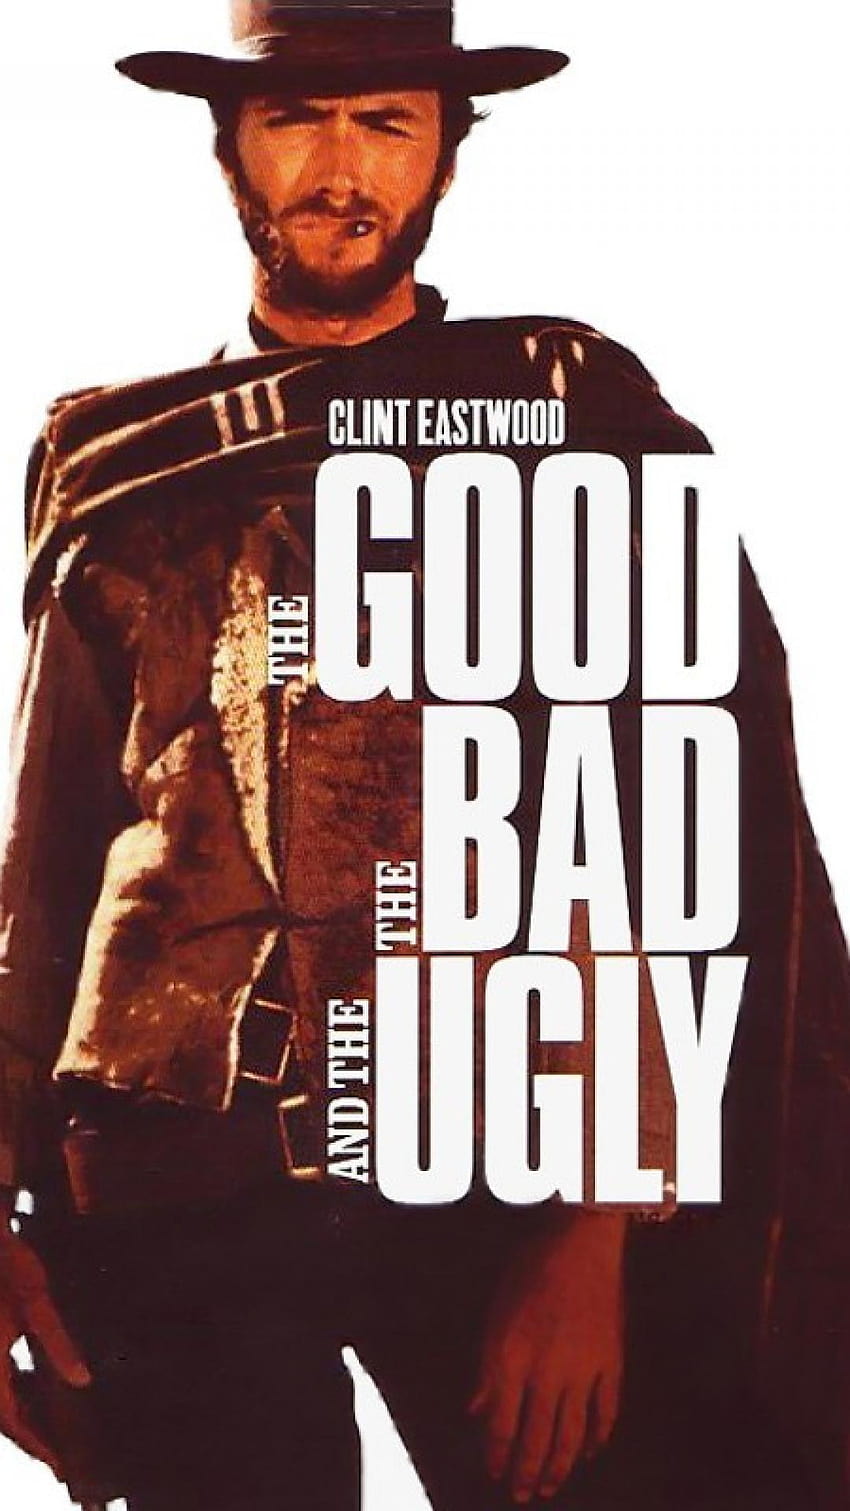 Download Western Actor Clint Eastwood Wallpaper | Wallpapers.com